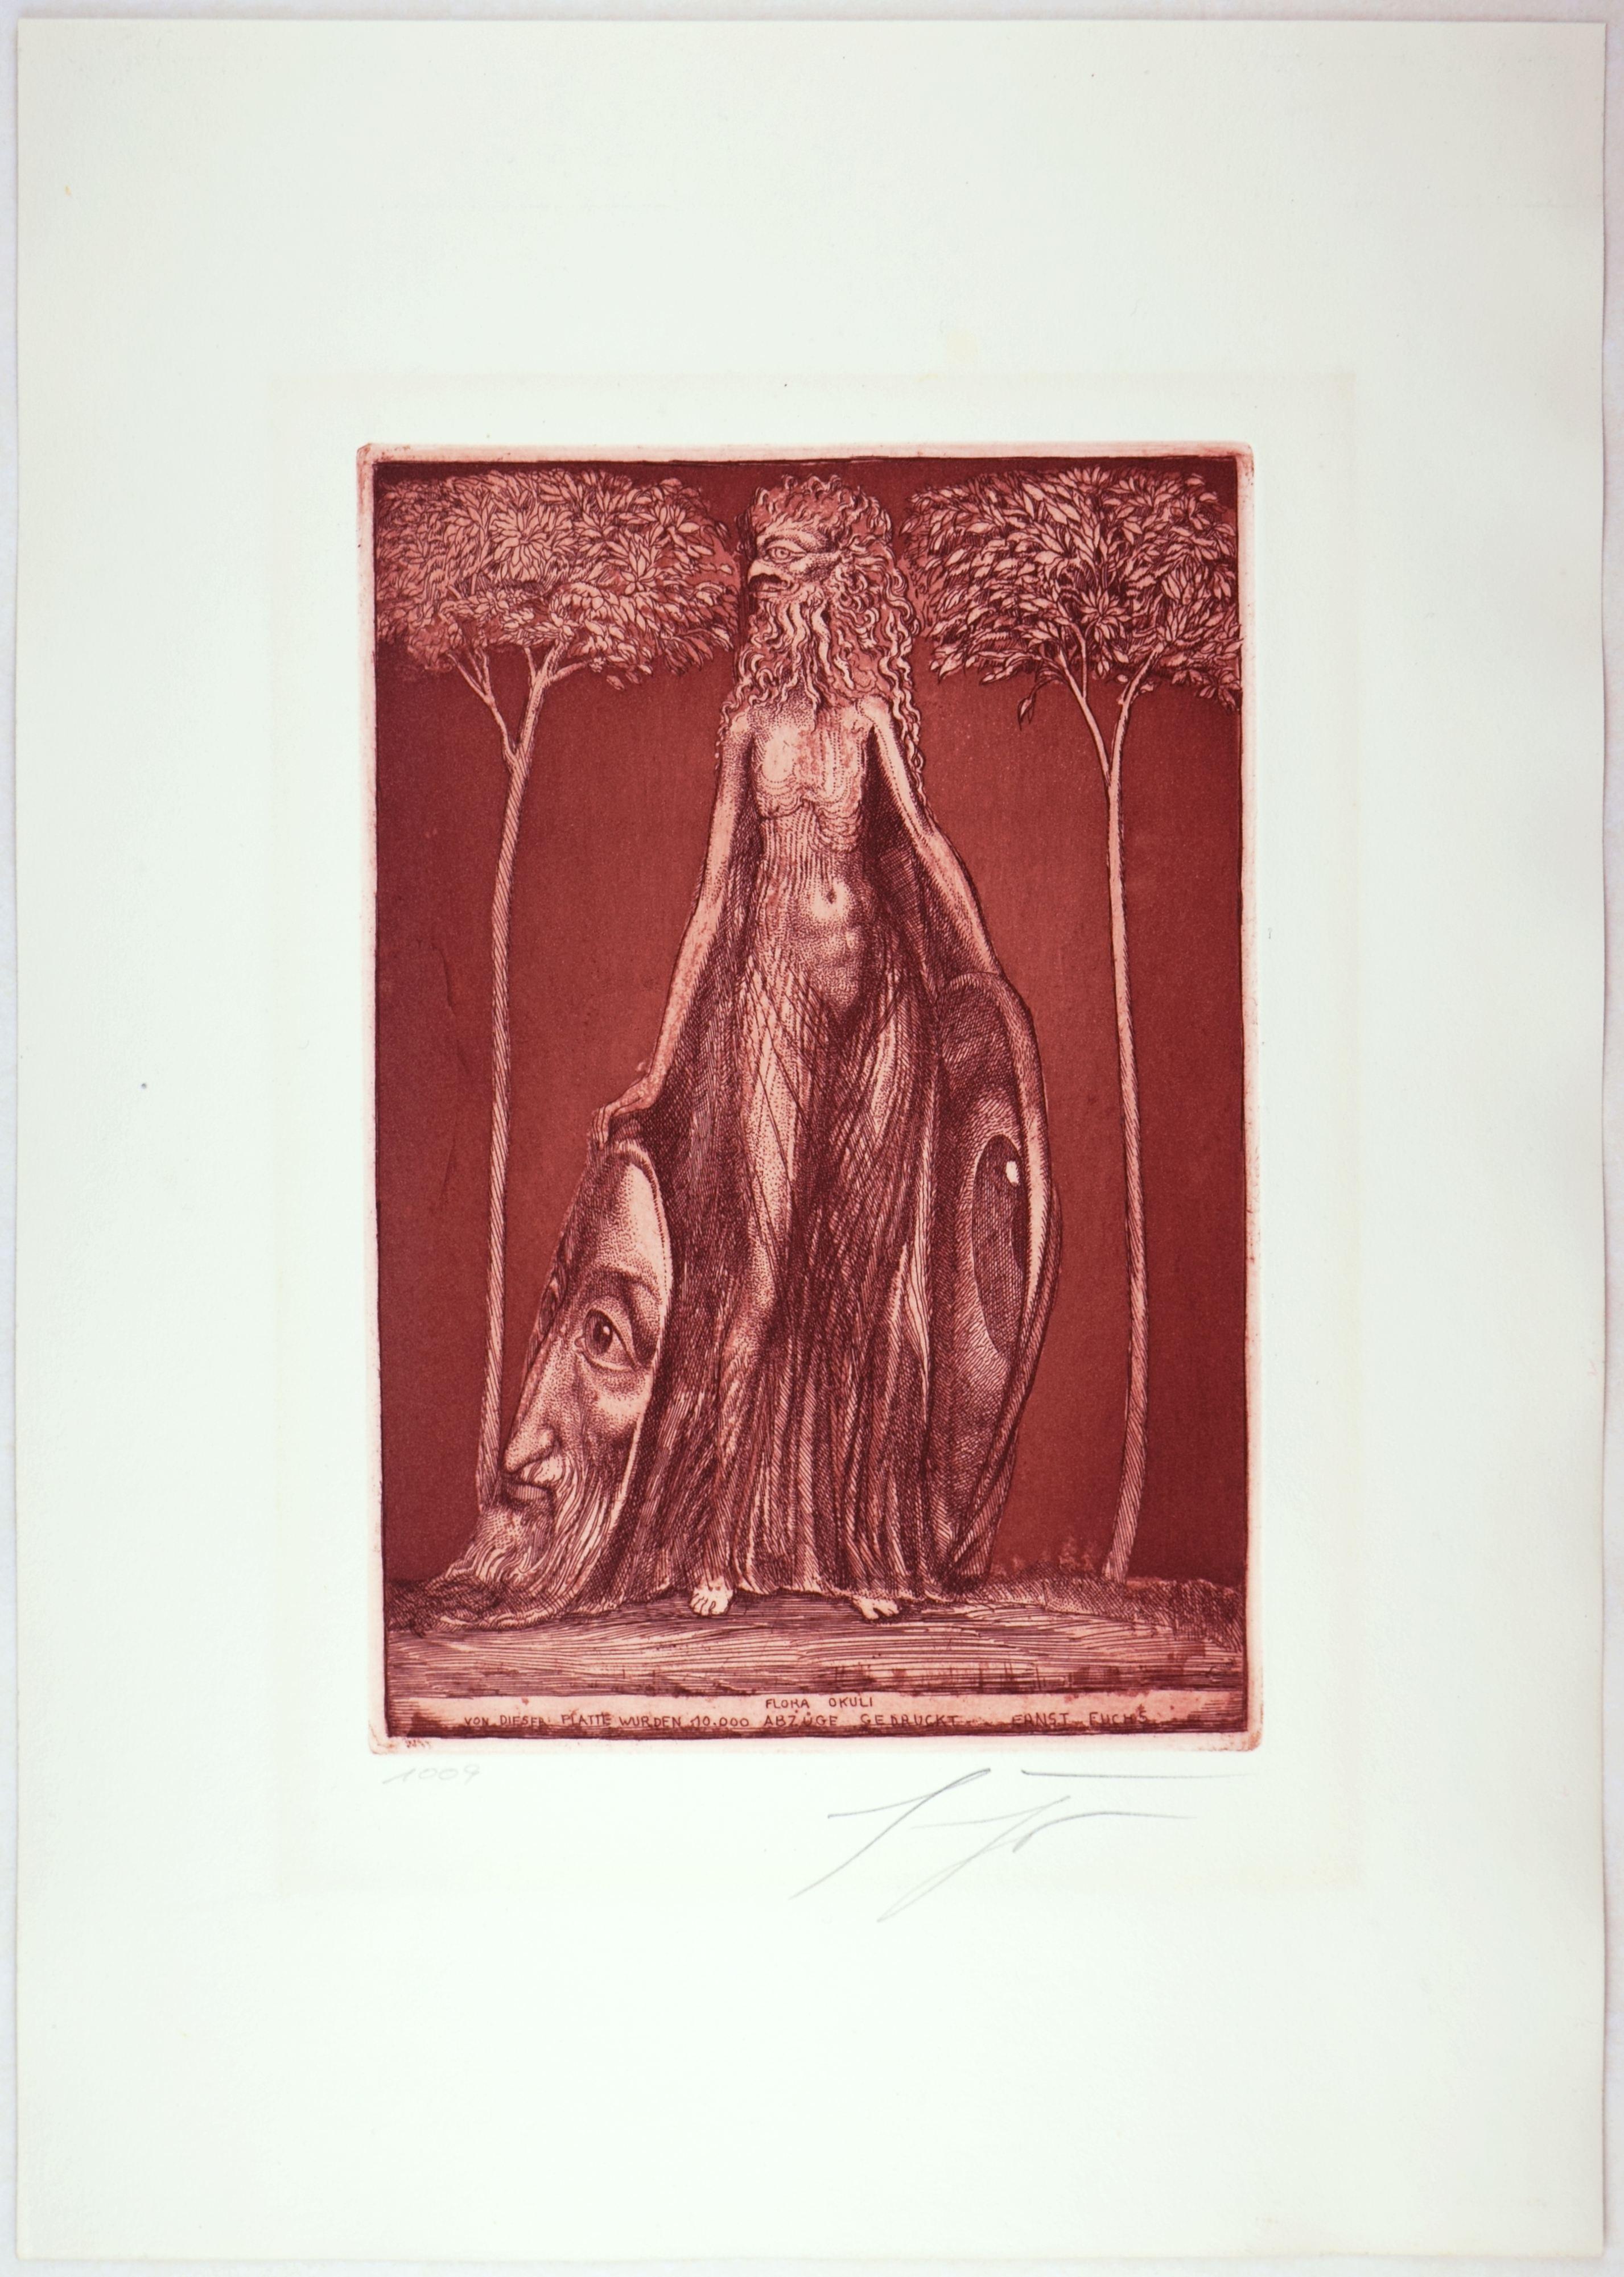 Ernst Fuchs (1930 Vienna - 2015 Vienna), Flora Okuli, 1975. Colour etching in reddish brown, 24 x 16.5 cm (image), 41 x 29.5 cm (sheet size), inscribed on the plate: 